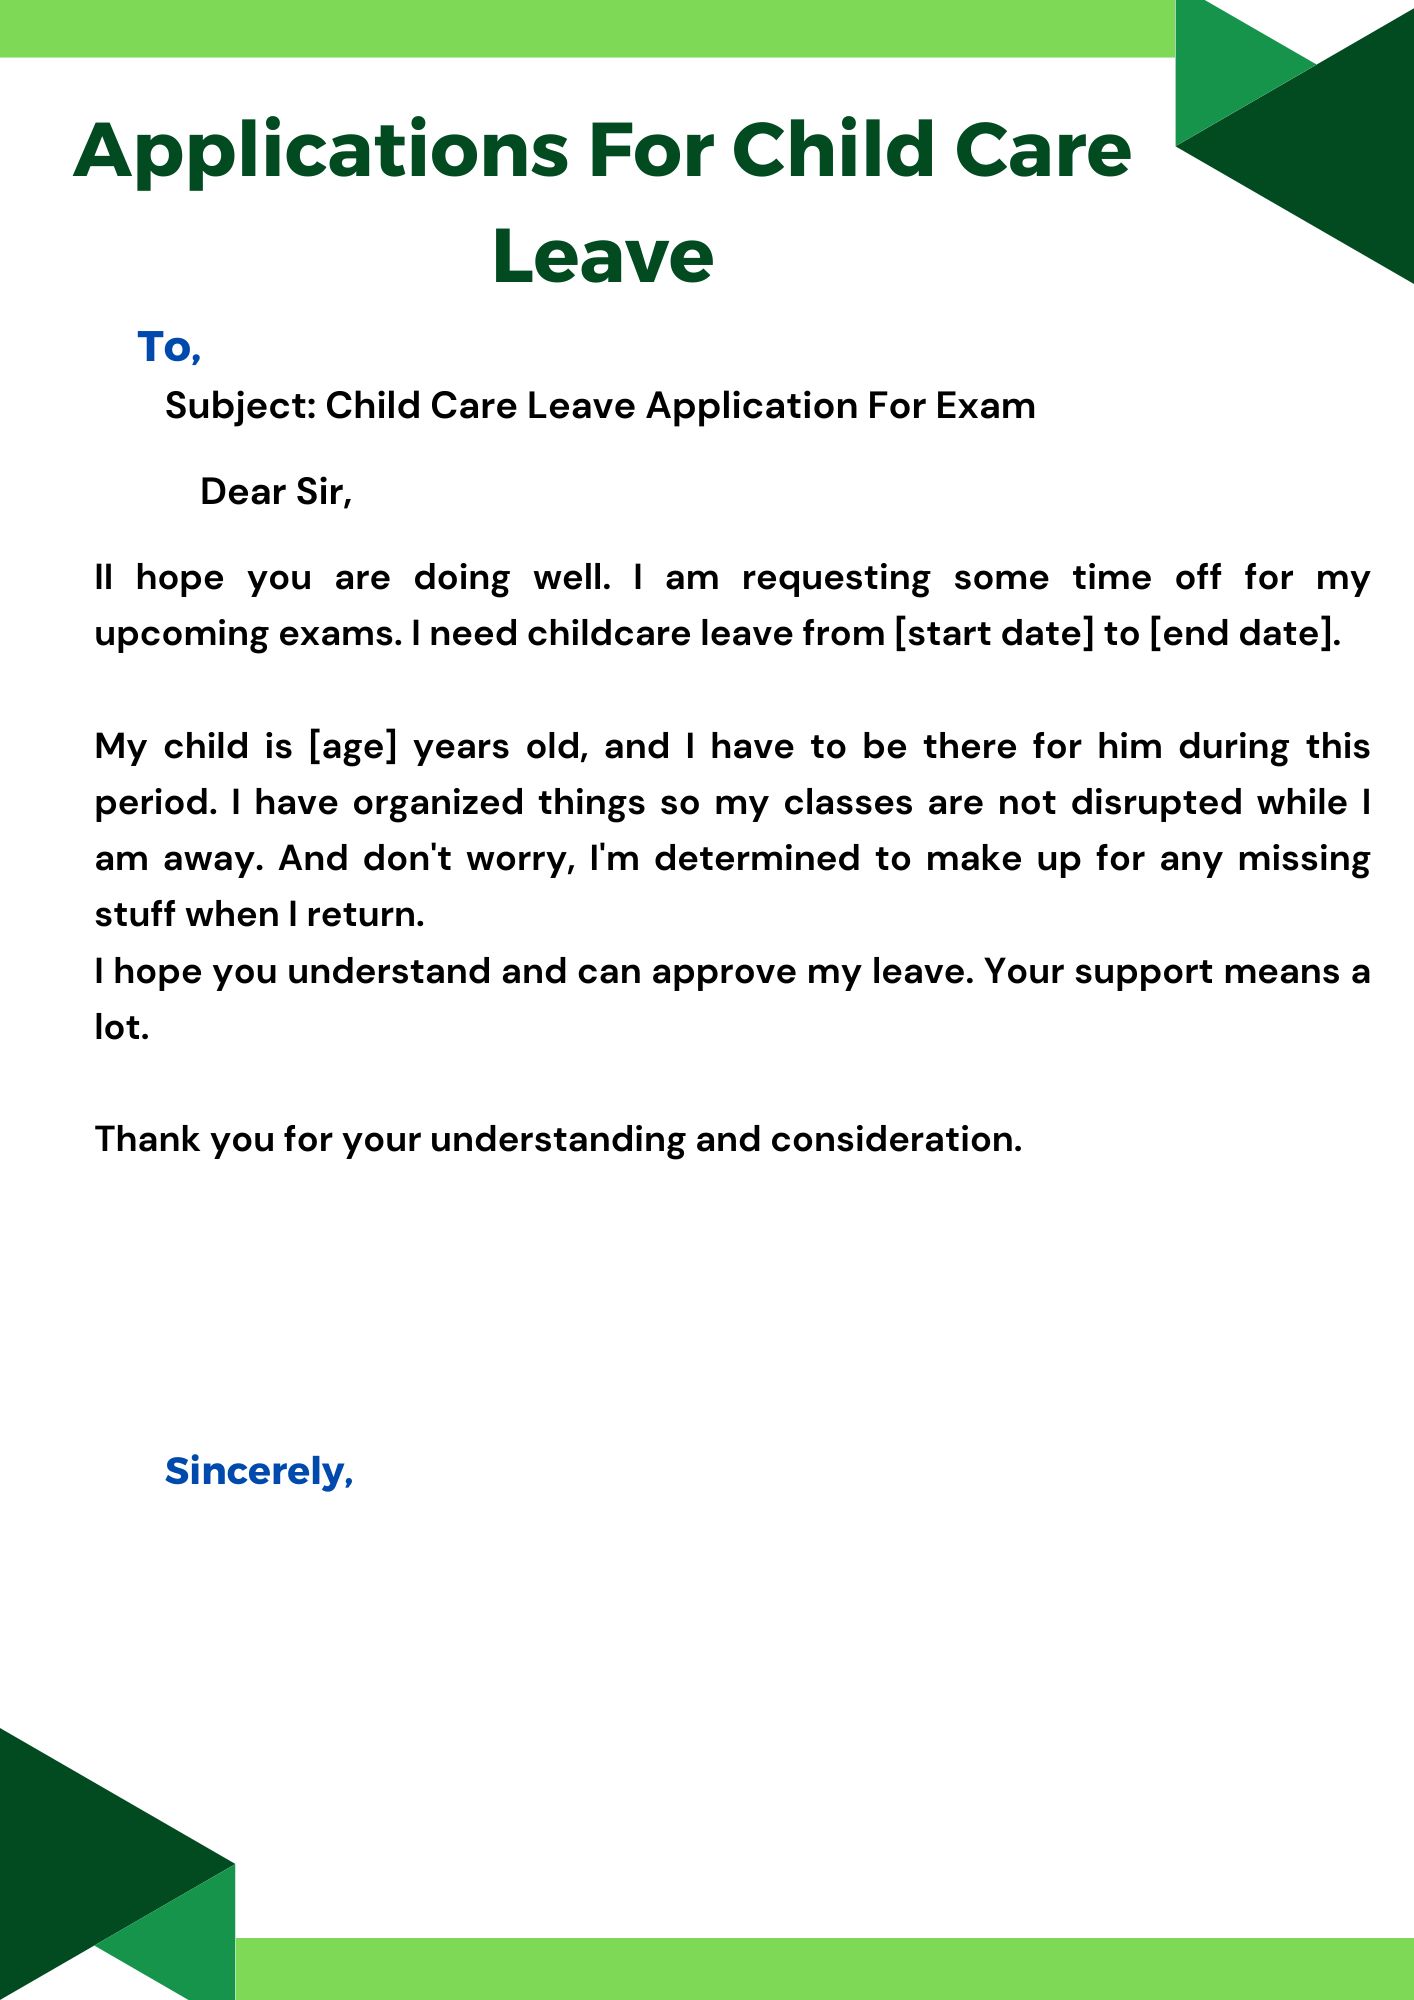 Child Care Leave Application For Primary School Teacher (Sample-10)